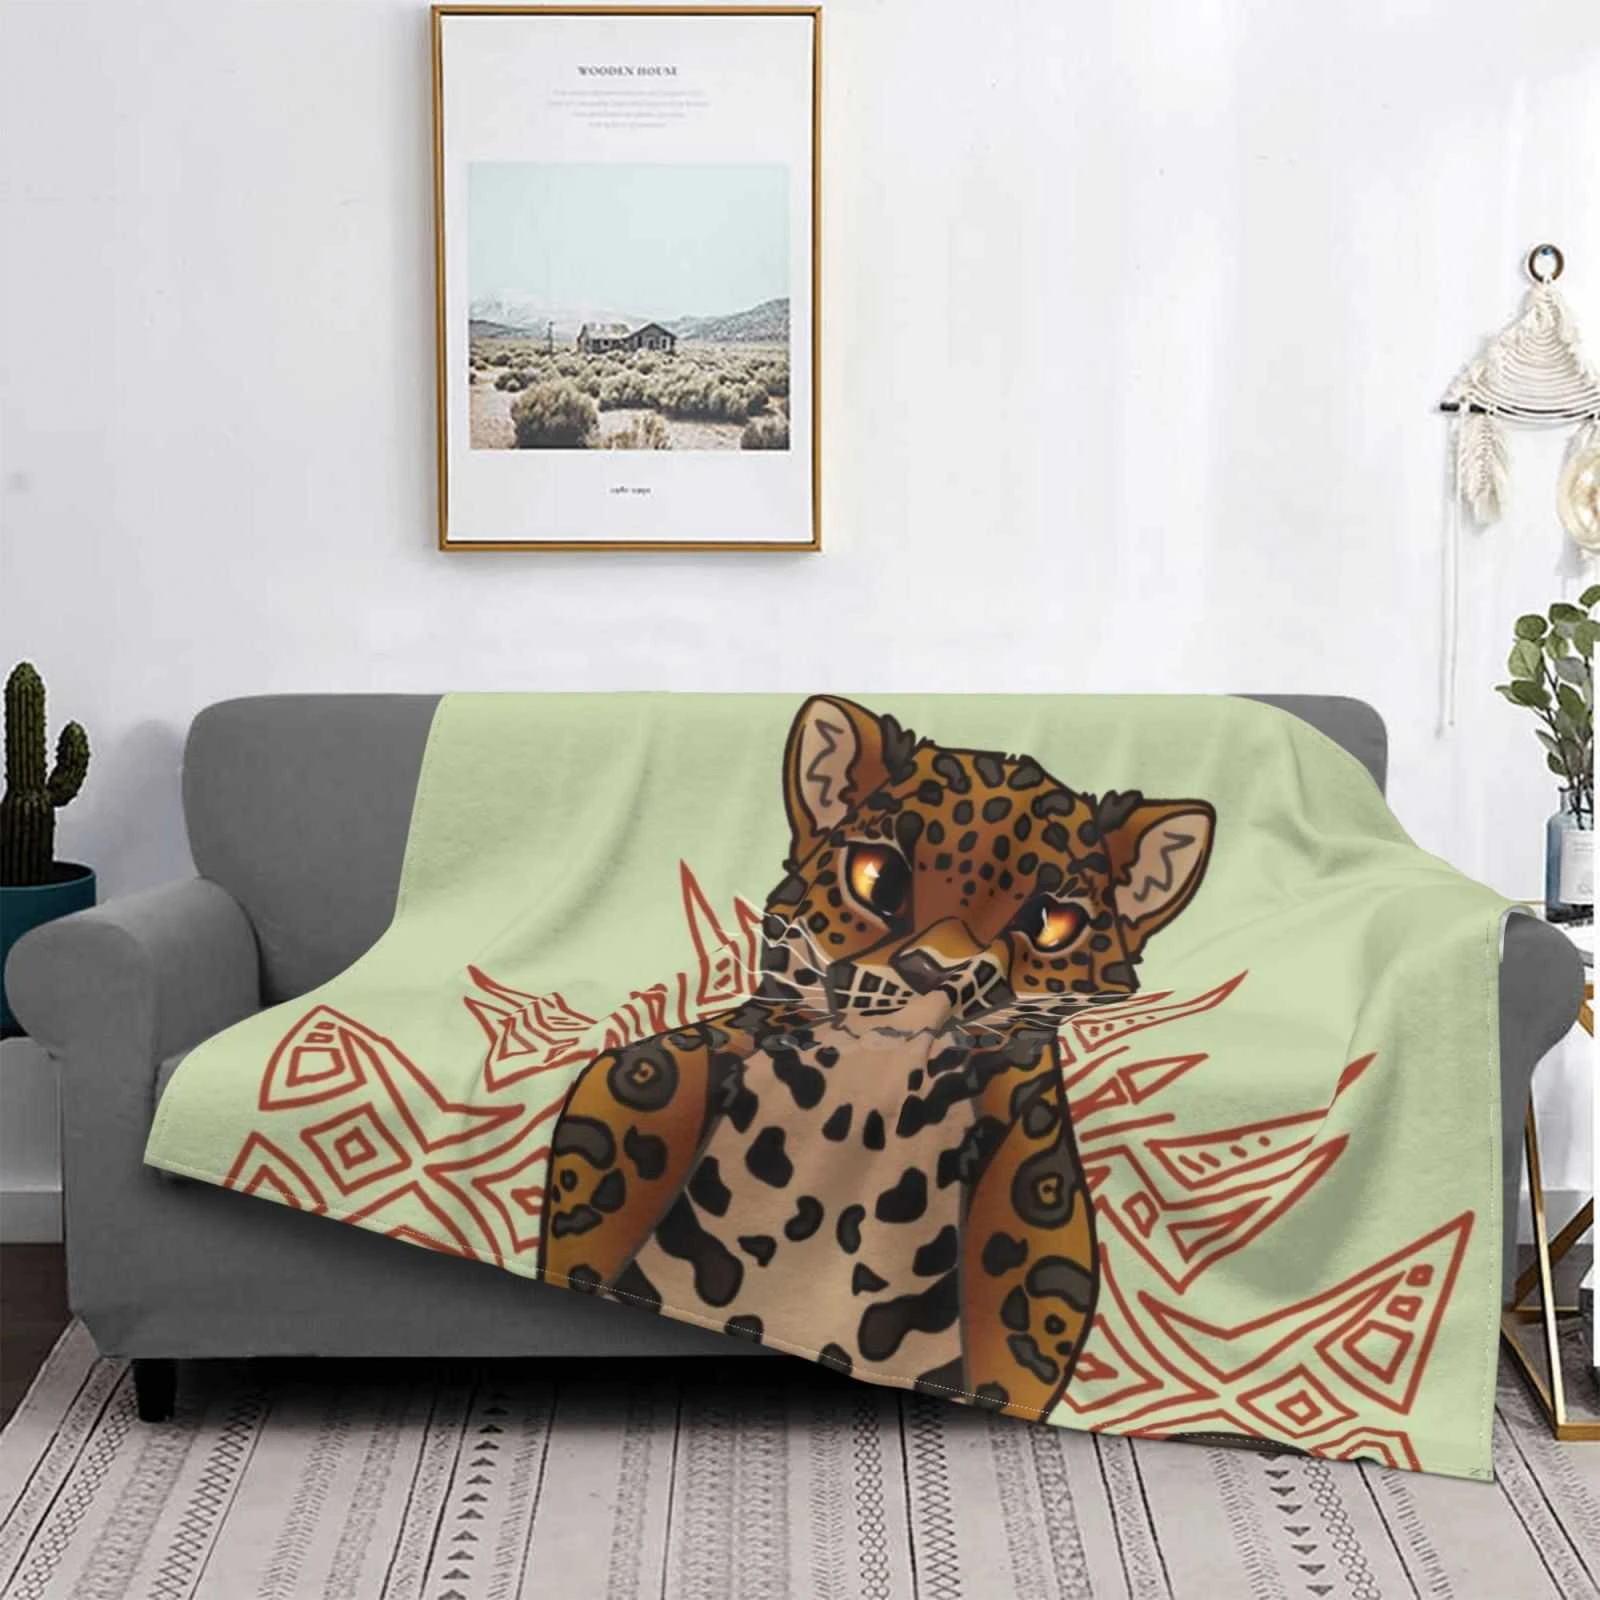 Wildlife flannel blanket